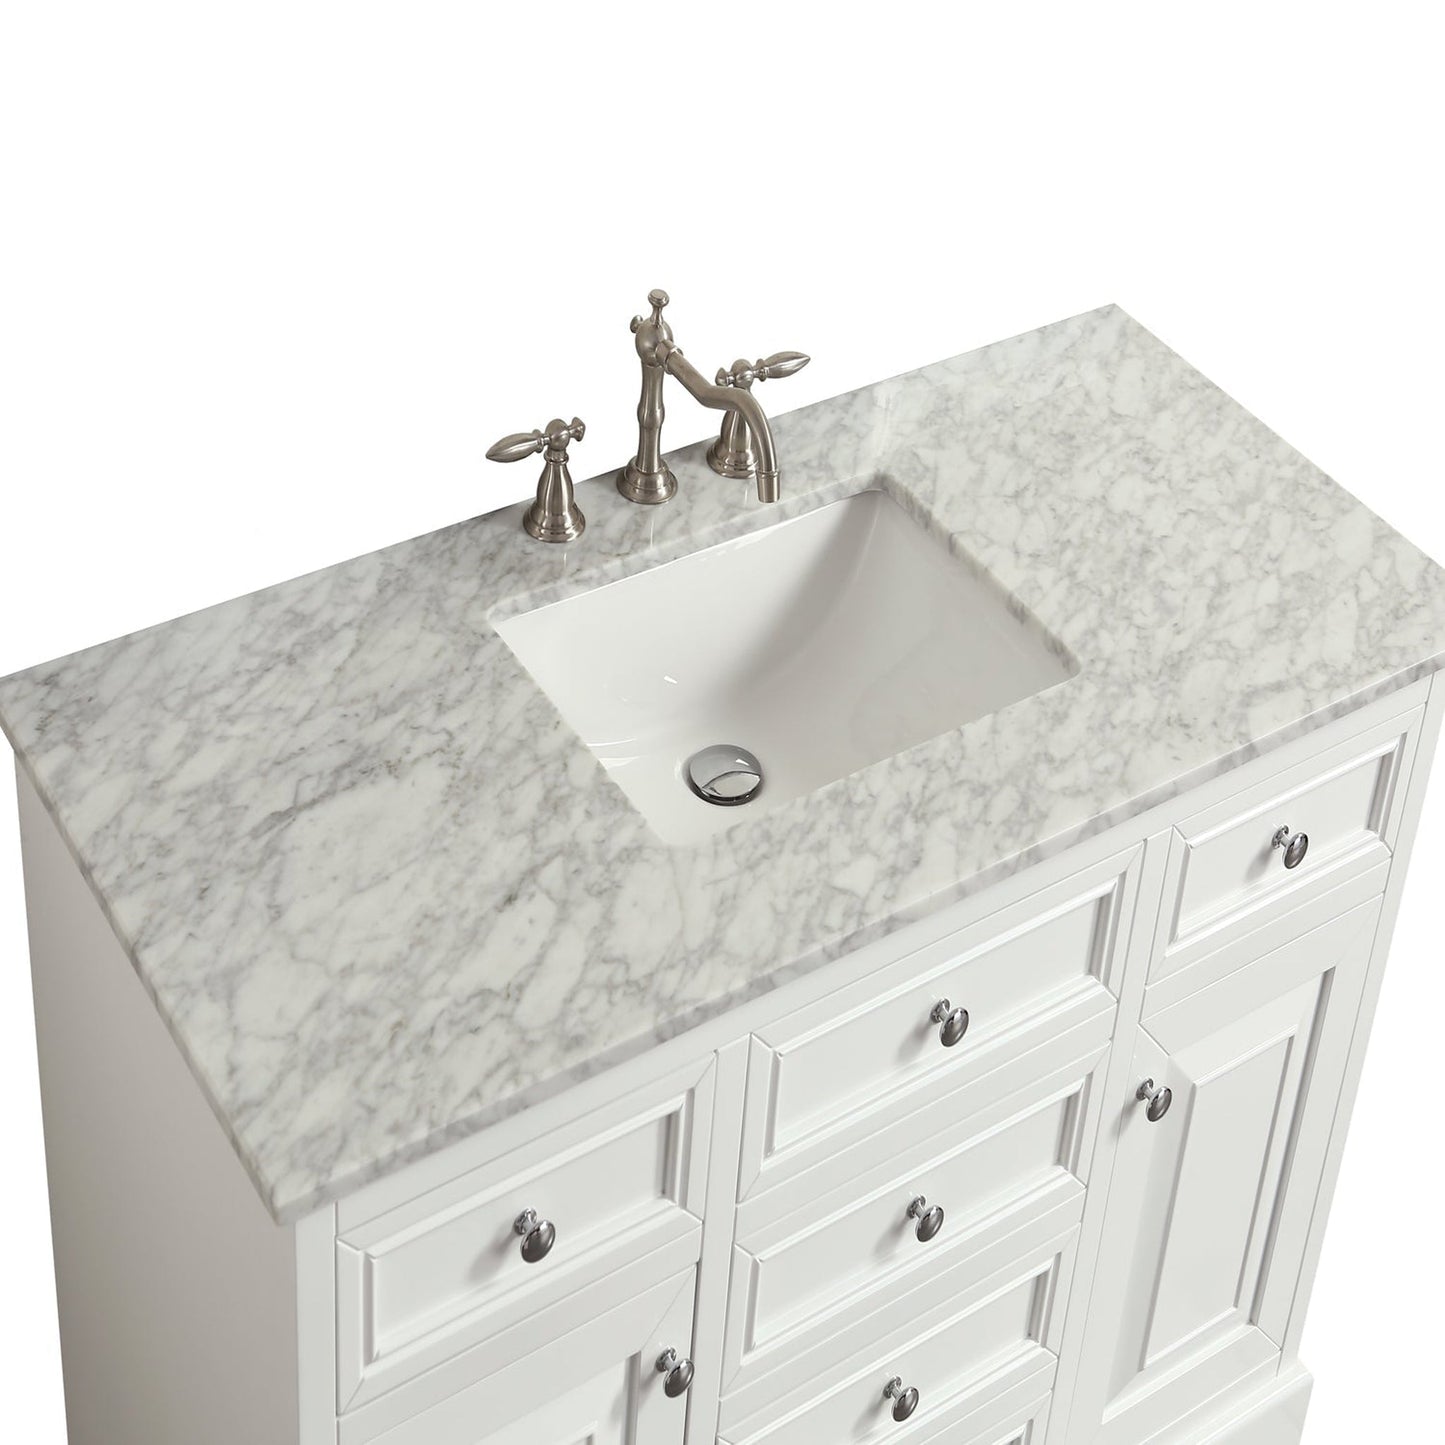 Eviva Monroe 42" x 35" White Bathroom Vanity With White Carrara Marble Countertop and Single Undermount Sink